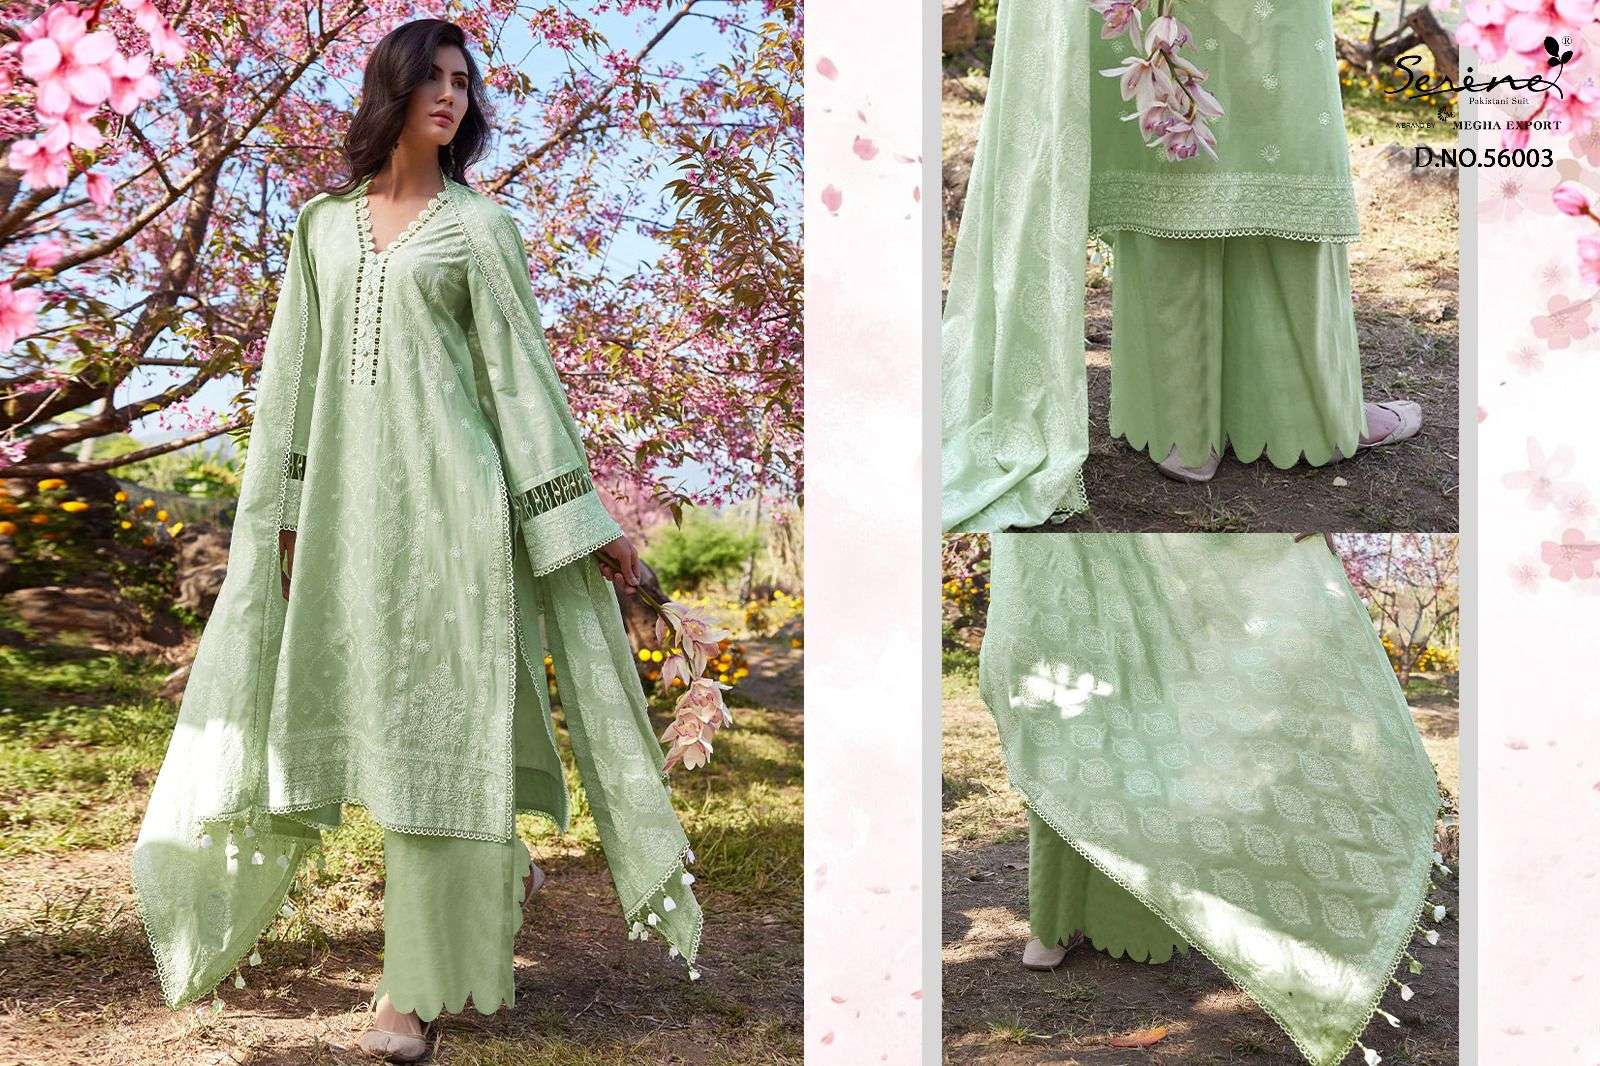 serine lawnkari 56001-56005 series lawn cotton embroidred original pakisatni concept suits online 